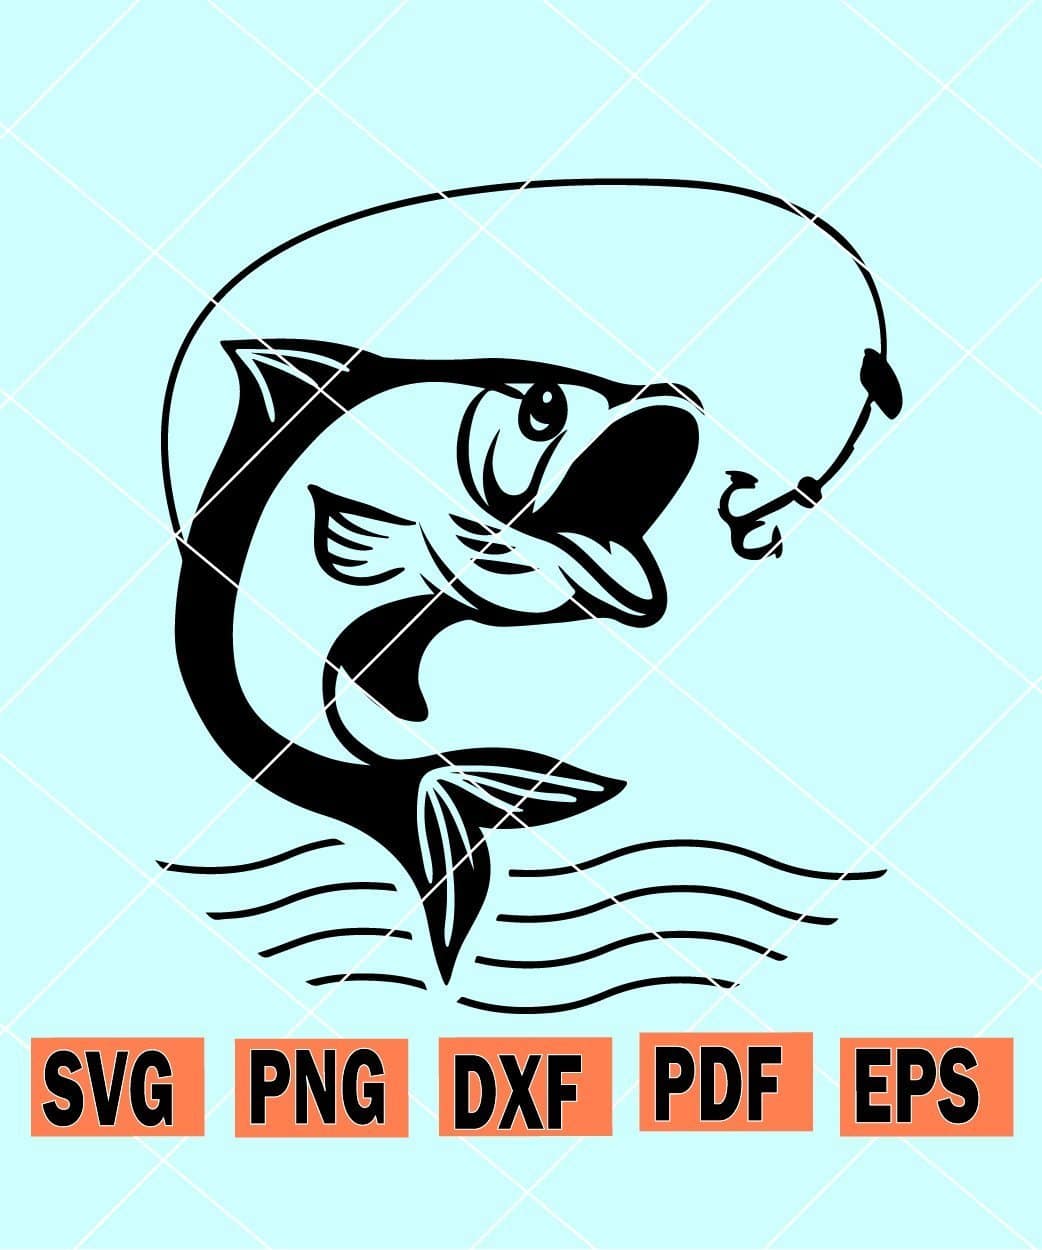 https://www.svghubs.com/wp-content/uploads/2020/08/fishing-pole-01.jpg